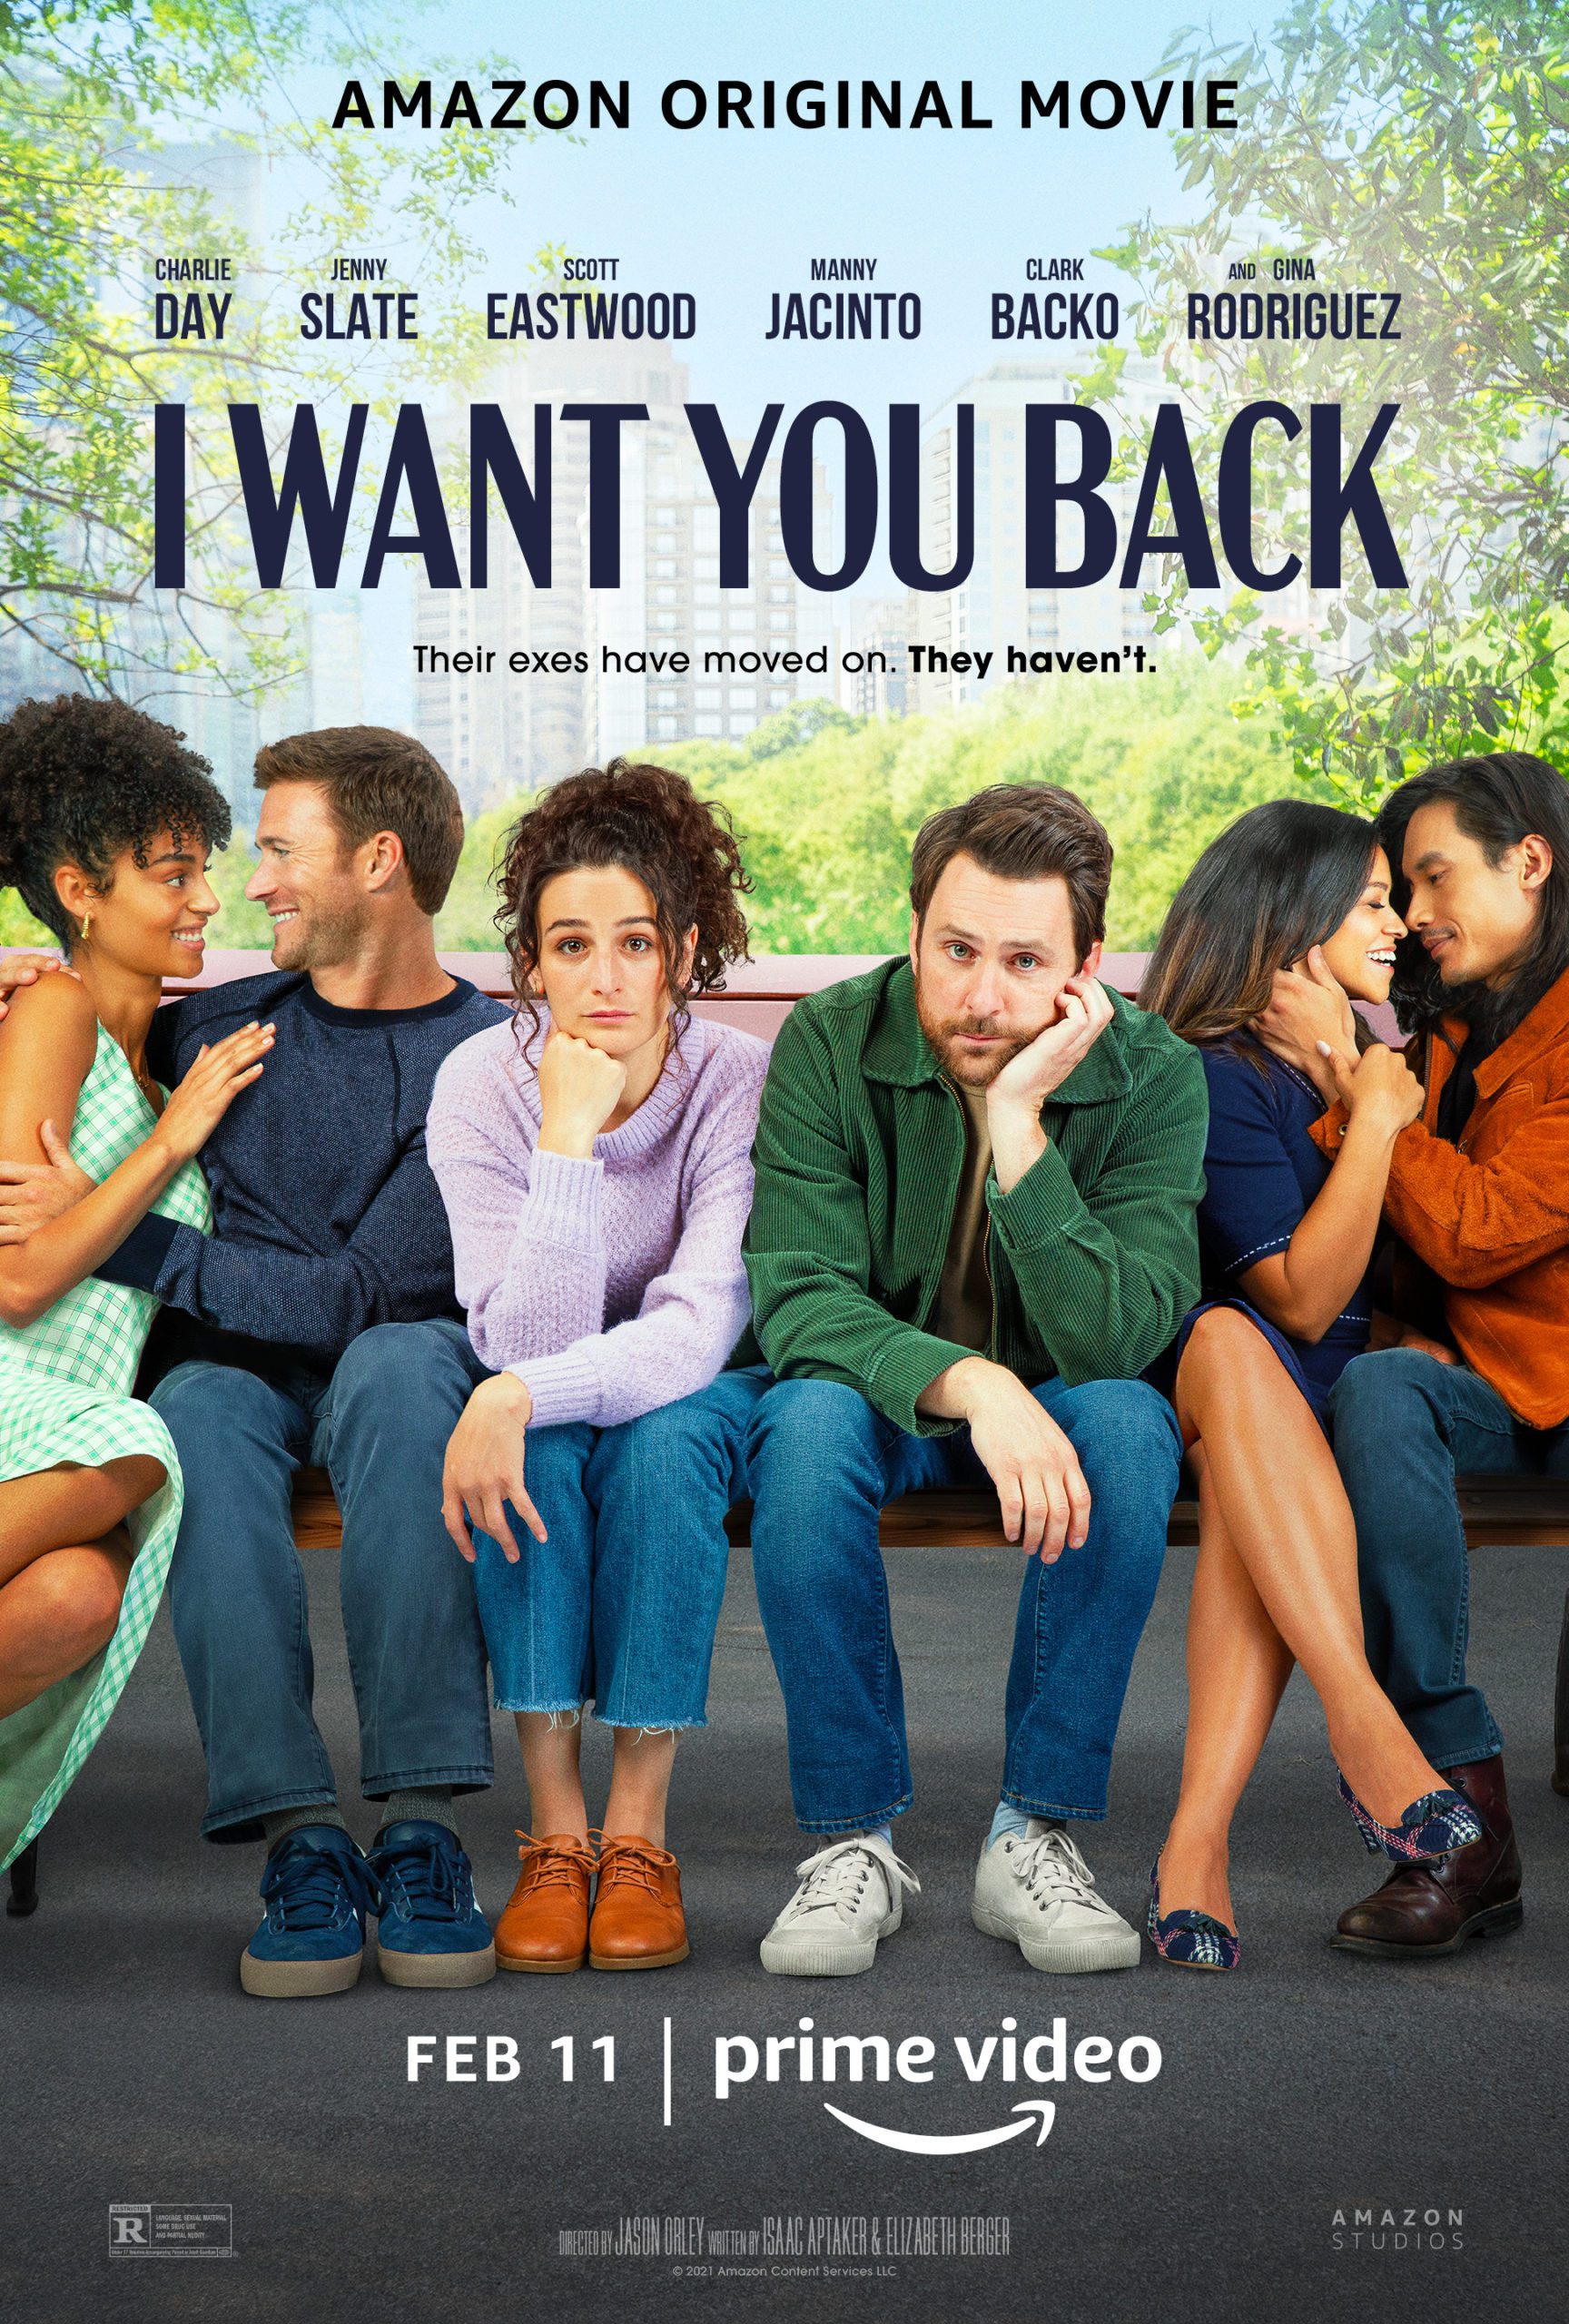 "I Want You Back": Amazon Original Film startet am 11.2. exklusiv bei Prime Video